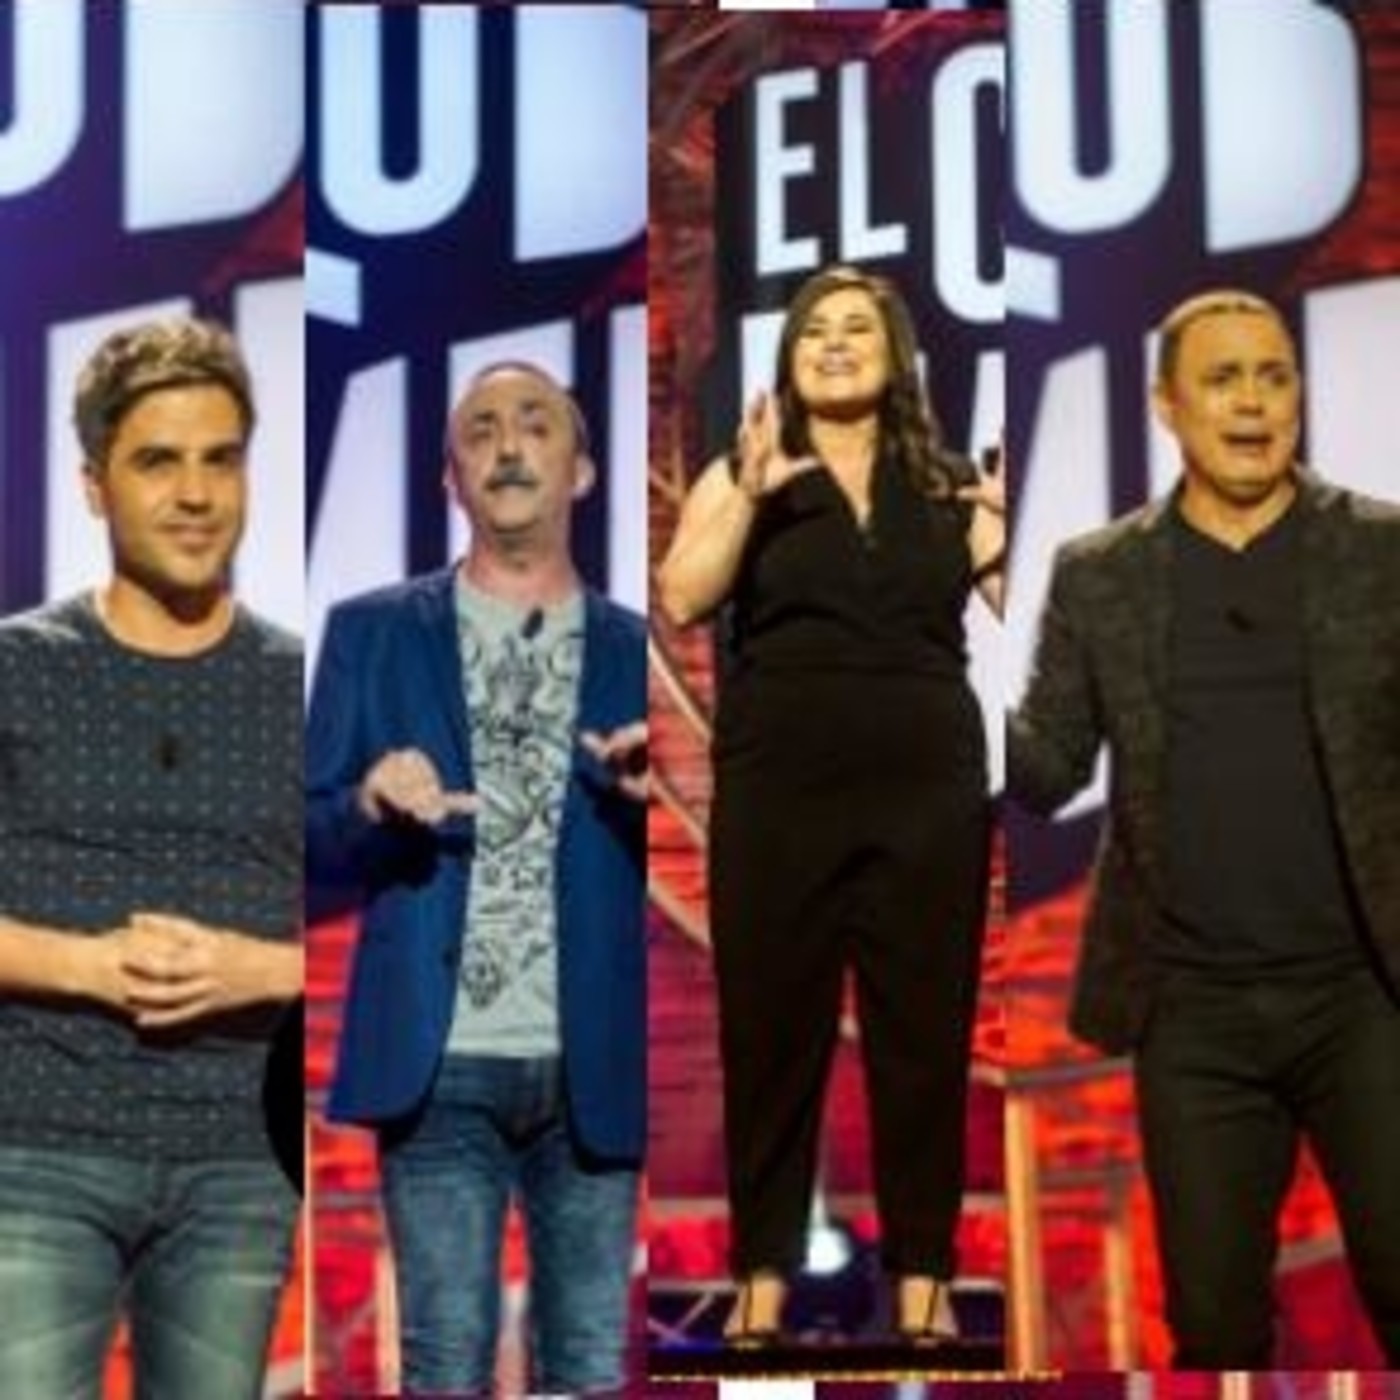 El Club de la Comedia T6x04 - Ernesto Sevilla, Dani Martínez, Santi Rodírguez, Inma Cueva y Alexis Valdés